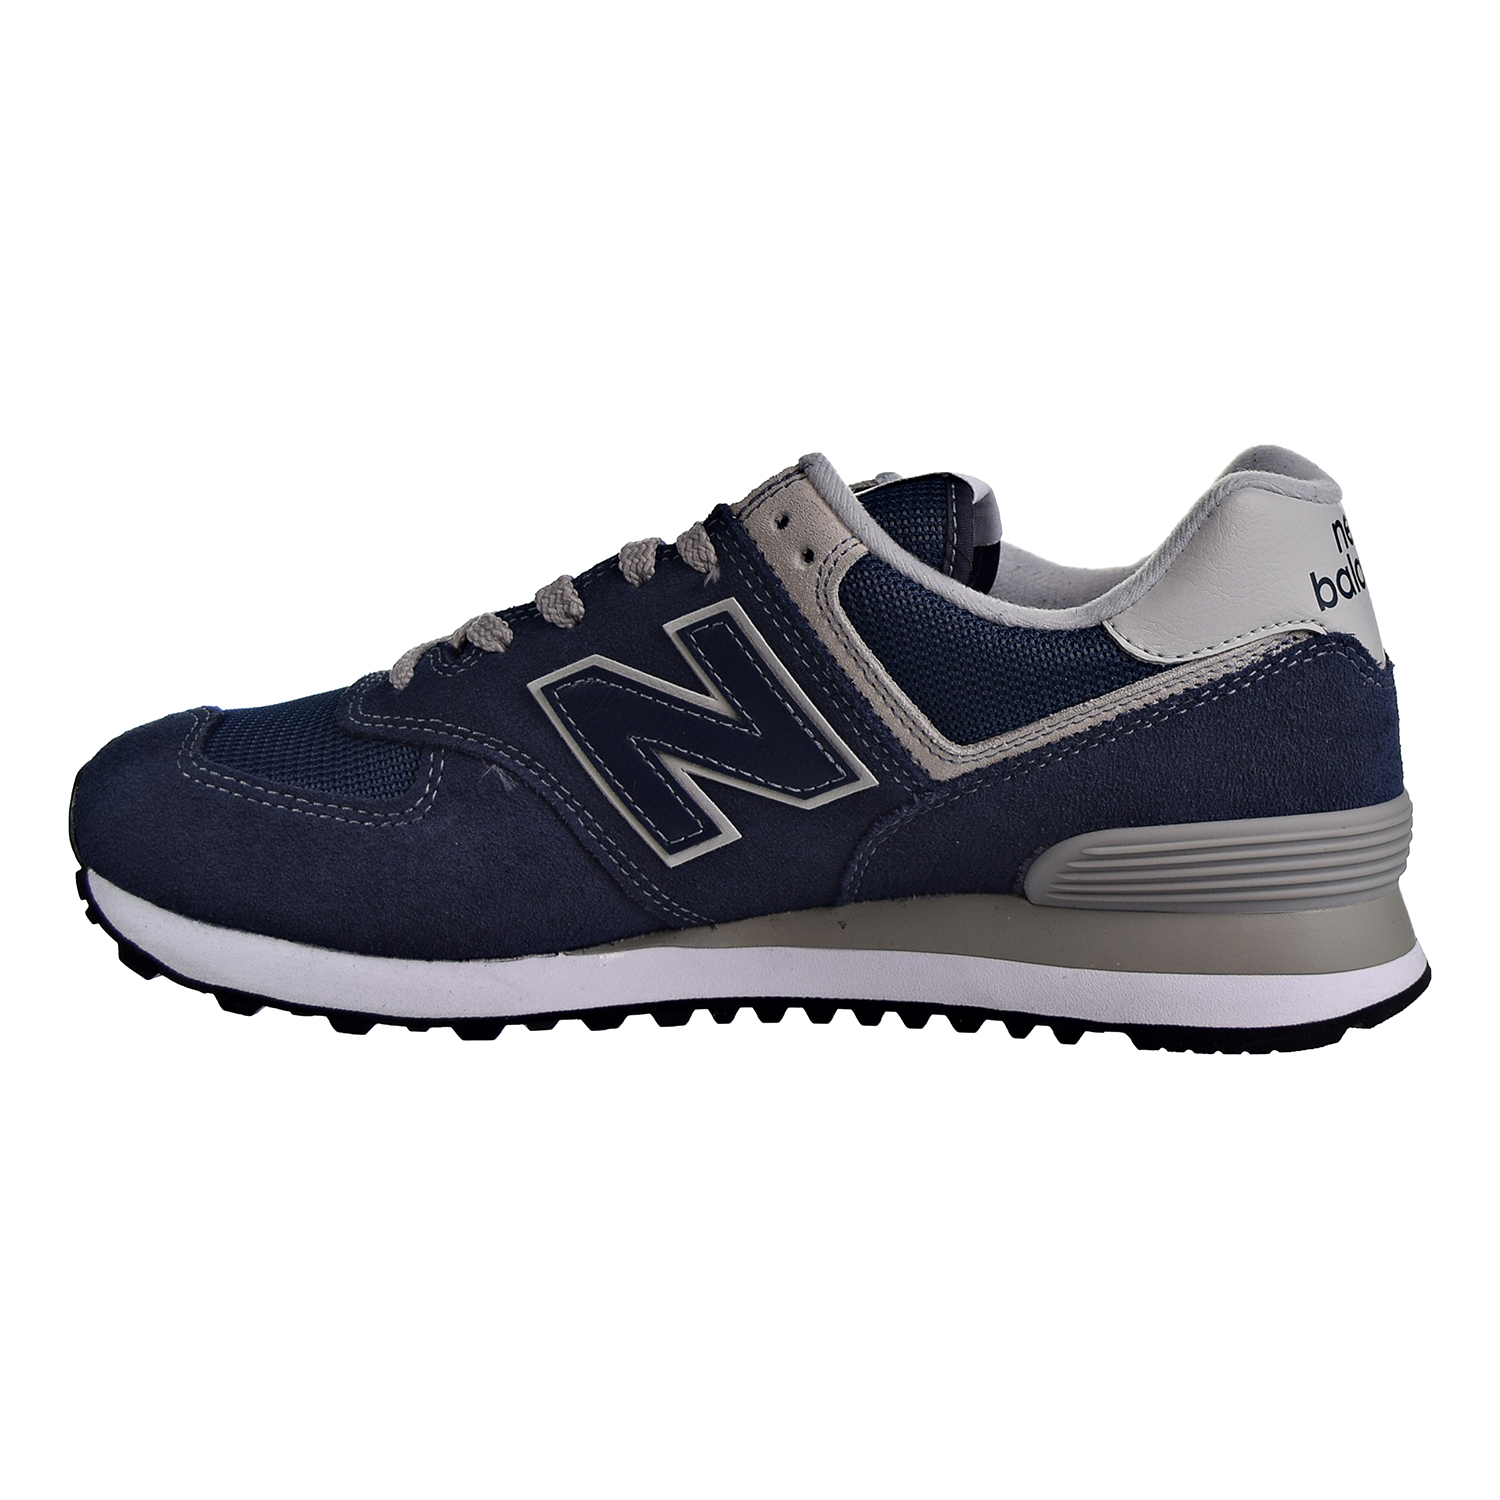 New Balance 574 Men's Shoes Navy-Grey ML574-EGN | eBay